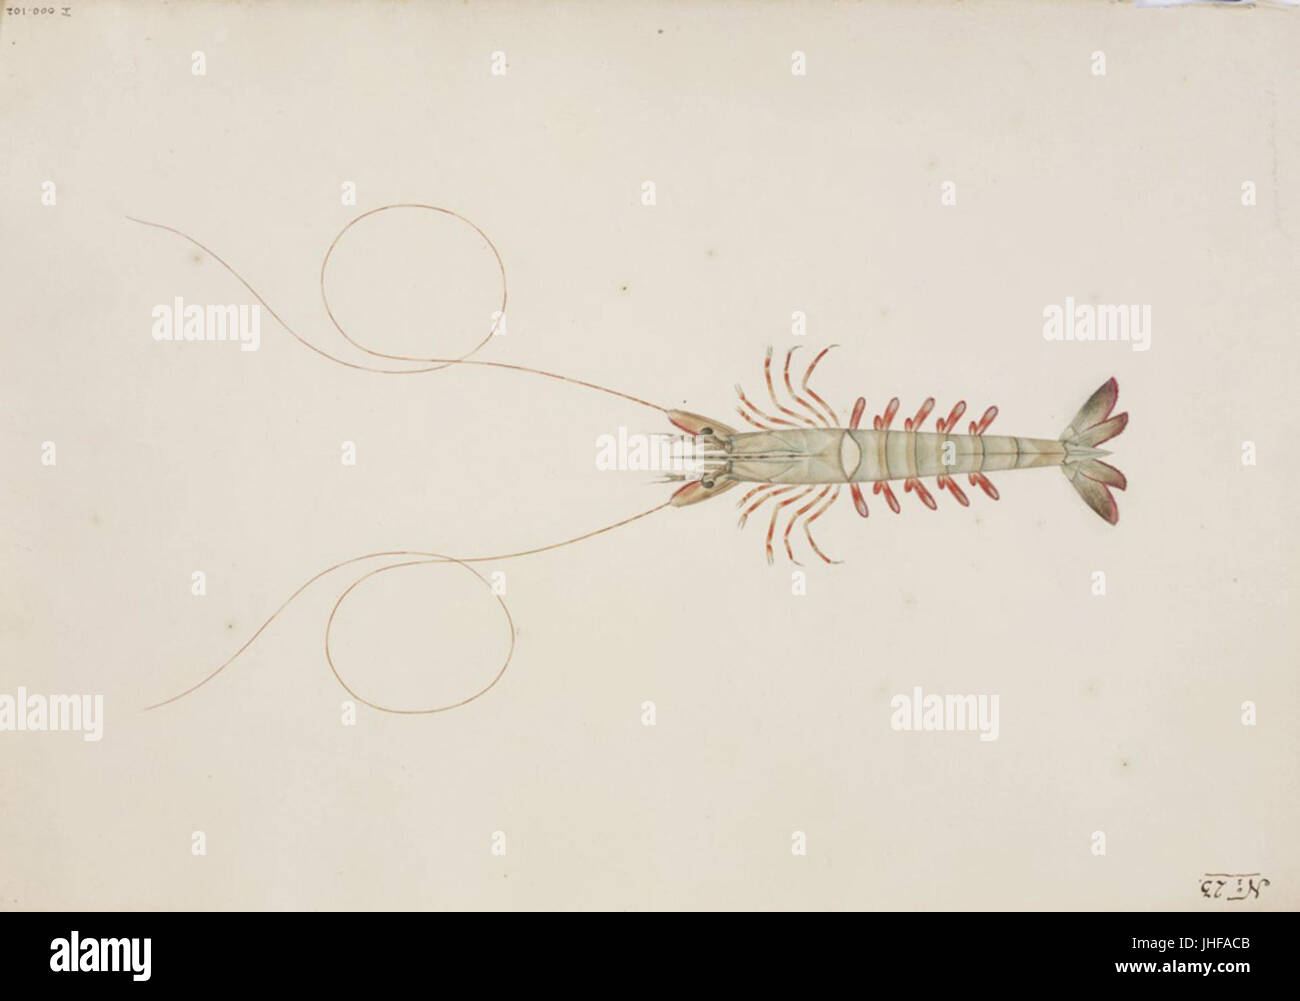 Naturalis Biodiversity Center - RMNH.ART.55 - Penaeus semisulcatus - Kawahara Keiga - 1823 - 1829 - Siebold Collection - pencil drawing - water colour Stock Photo